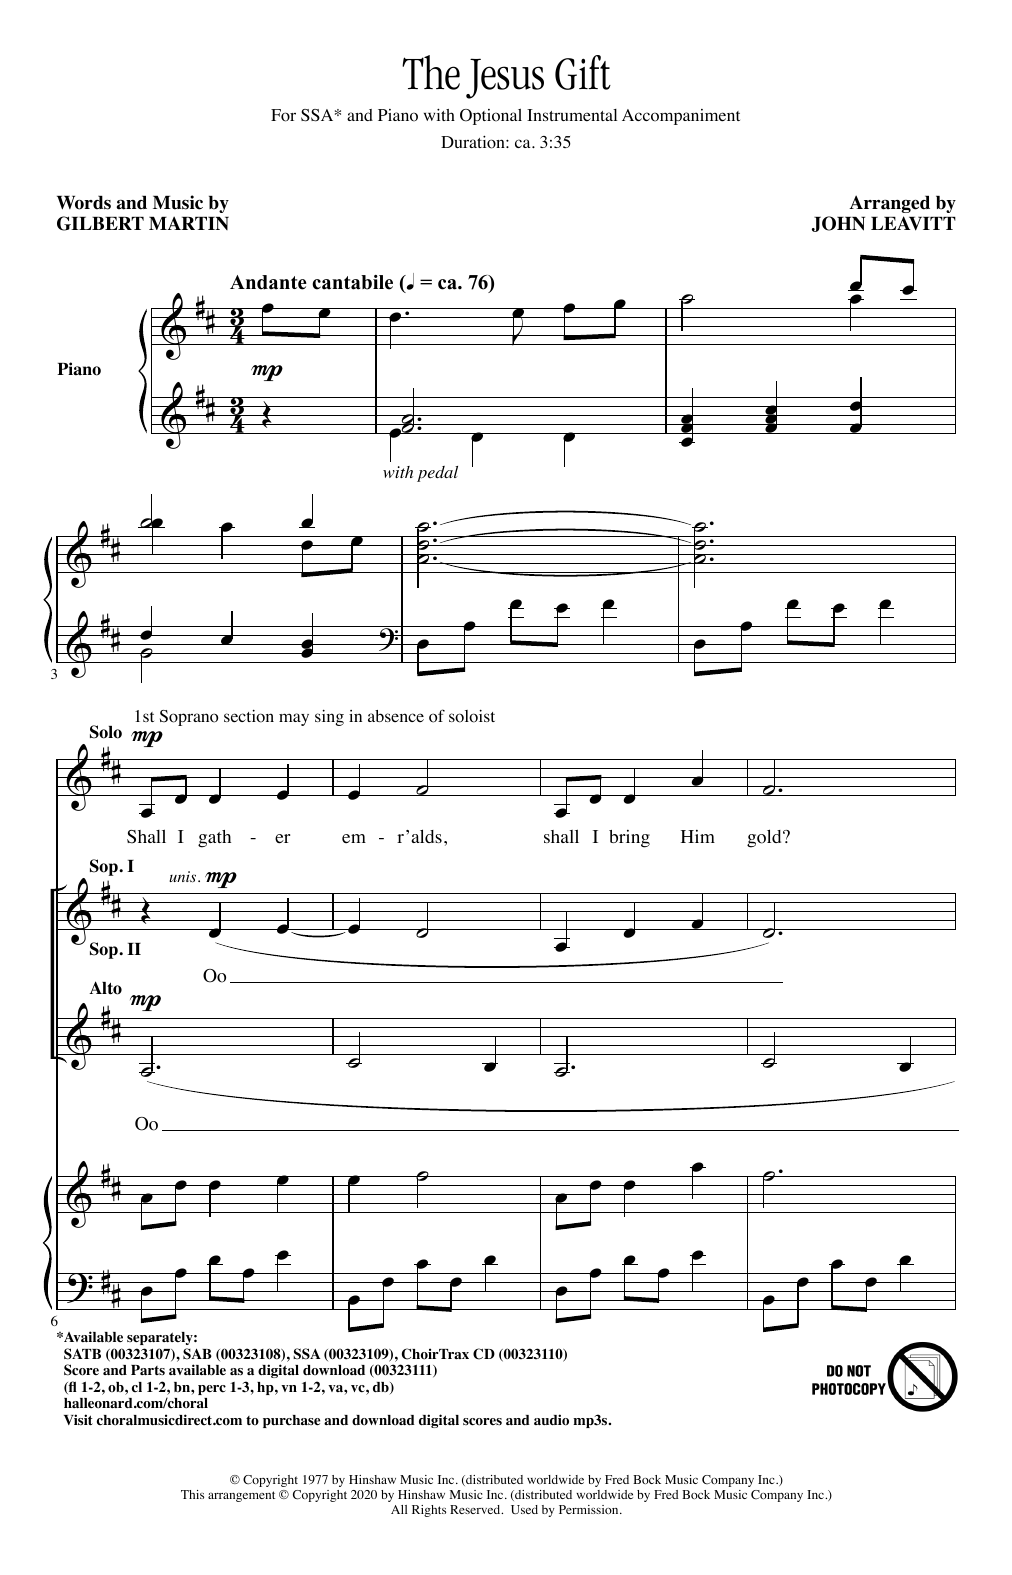 Gilbert Martin The Jesus Gift (arr. John Leavitt) Sheet Music Notes & Chords for SAB Choir - Download or Print PDF